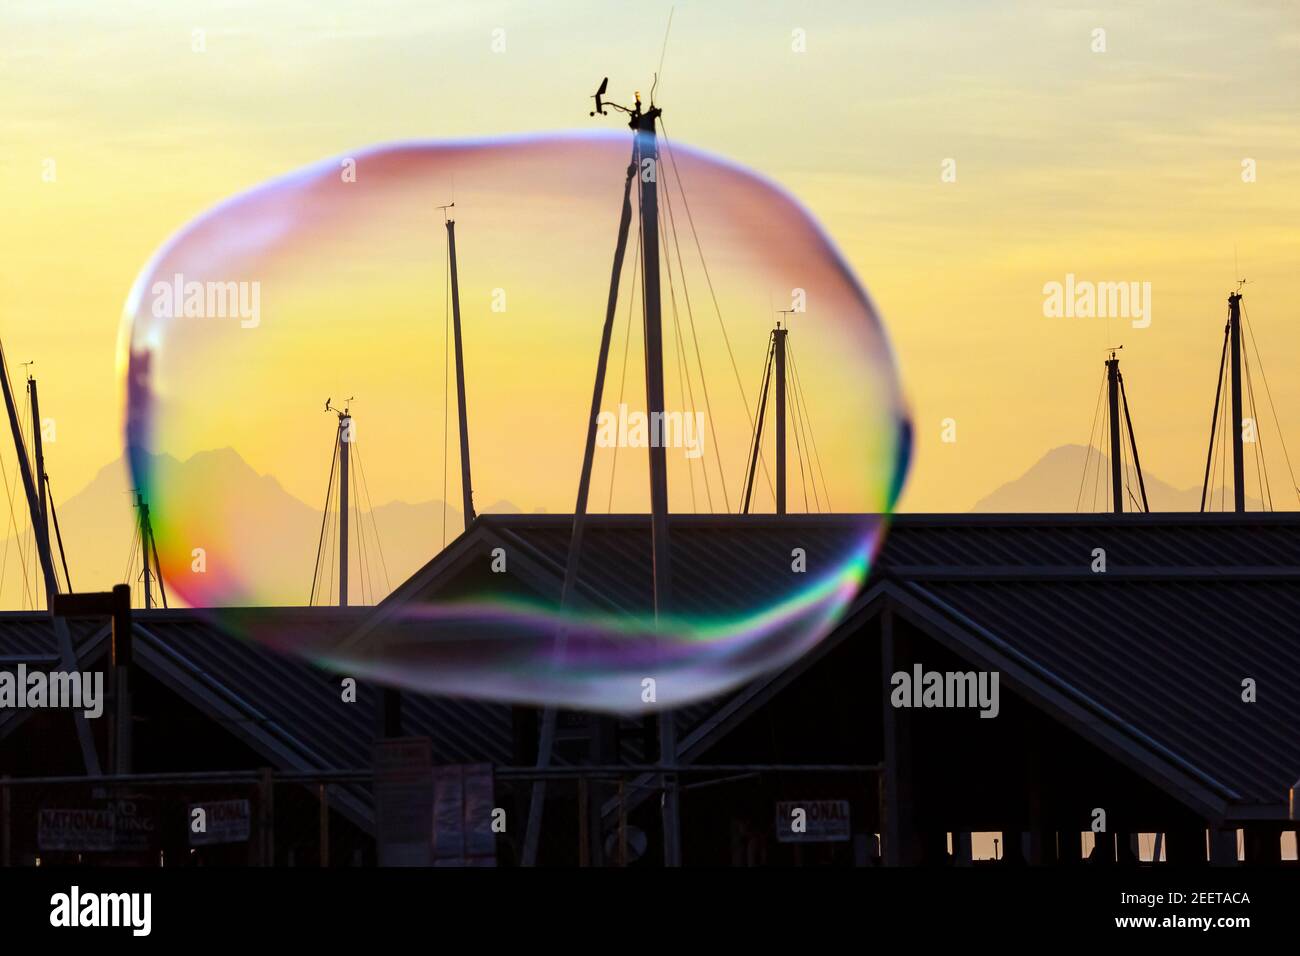 WA19202-00...WASHINGTON - A giant soap bubble passing over the Edmonds Marina at sunset. Stock Photo